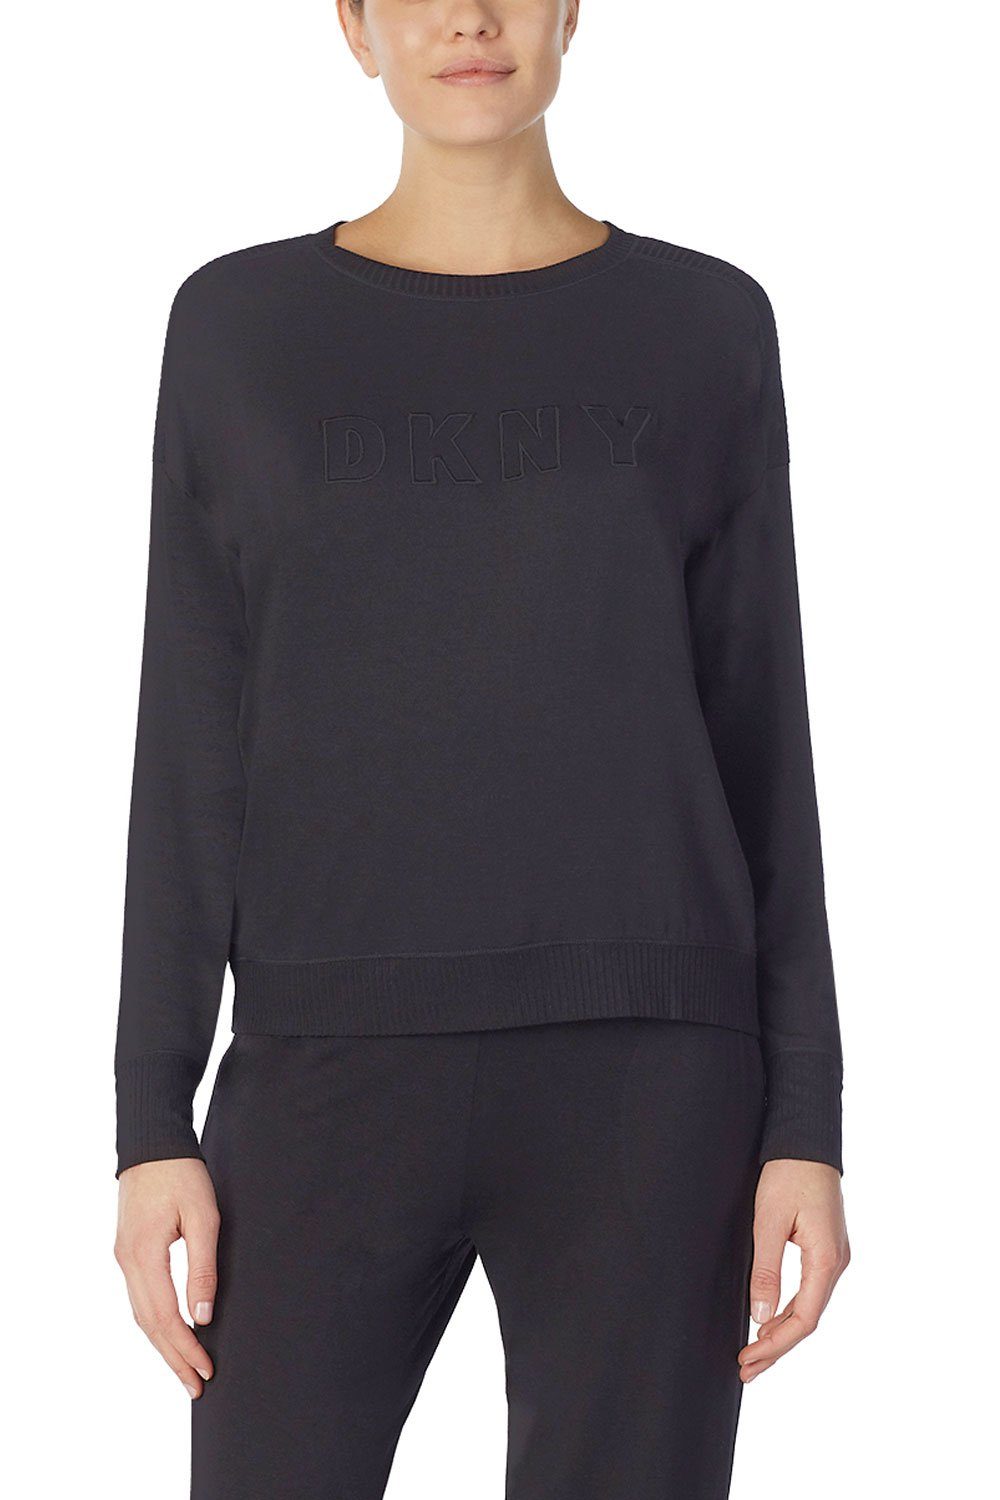 DKNY Sleepshirt Top Essentials YI3419330 black